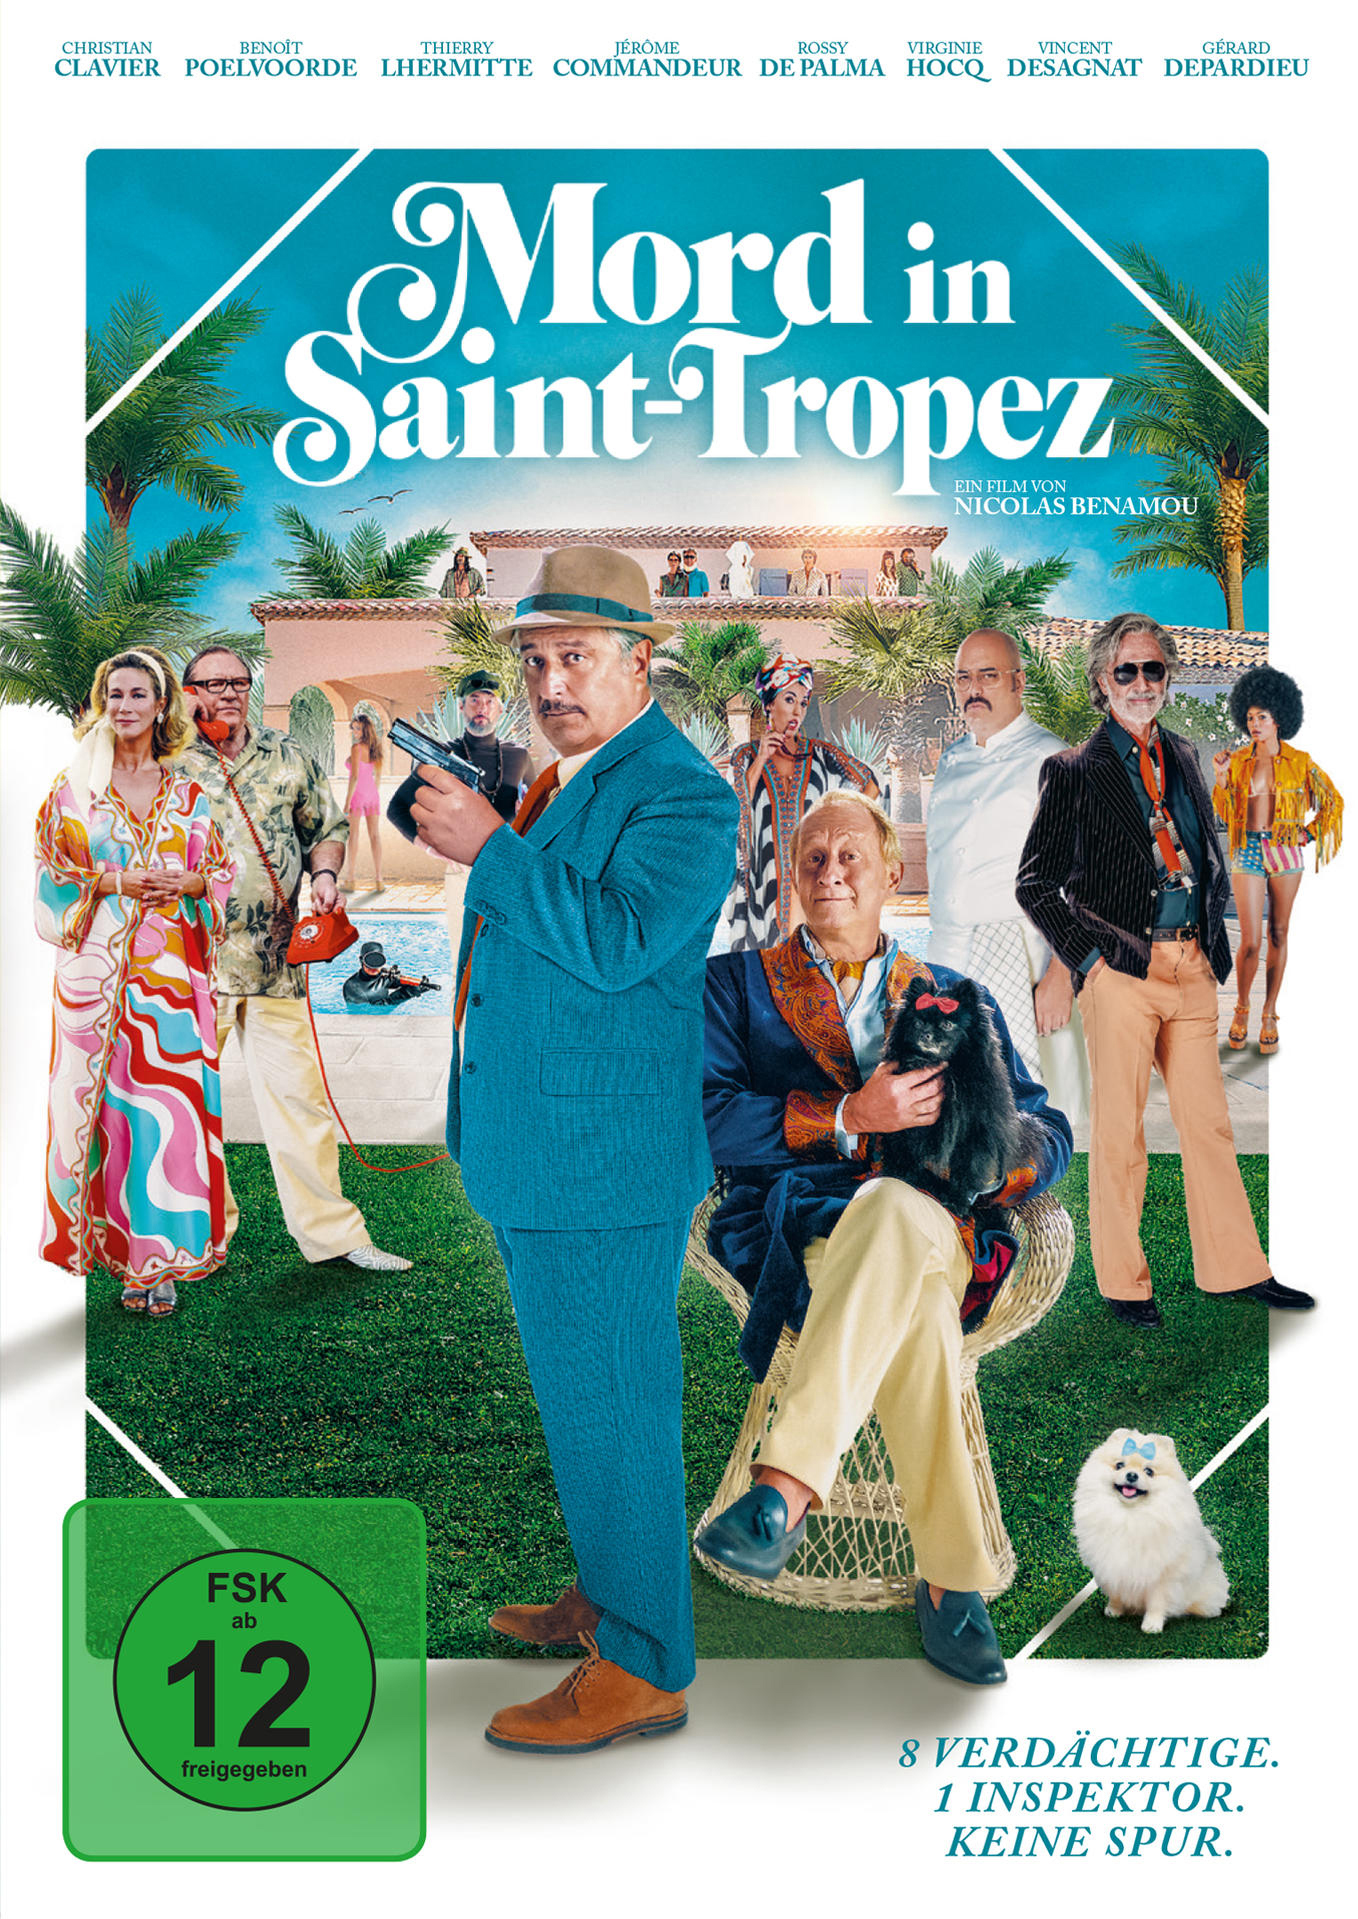 Mord DVD Saint-Tropez in